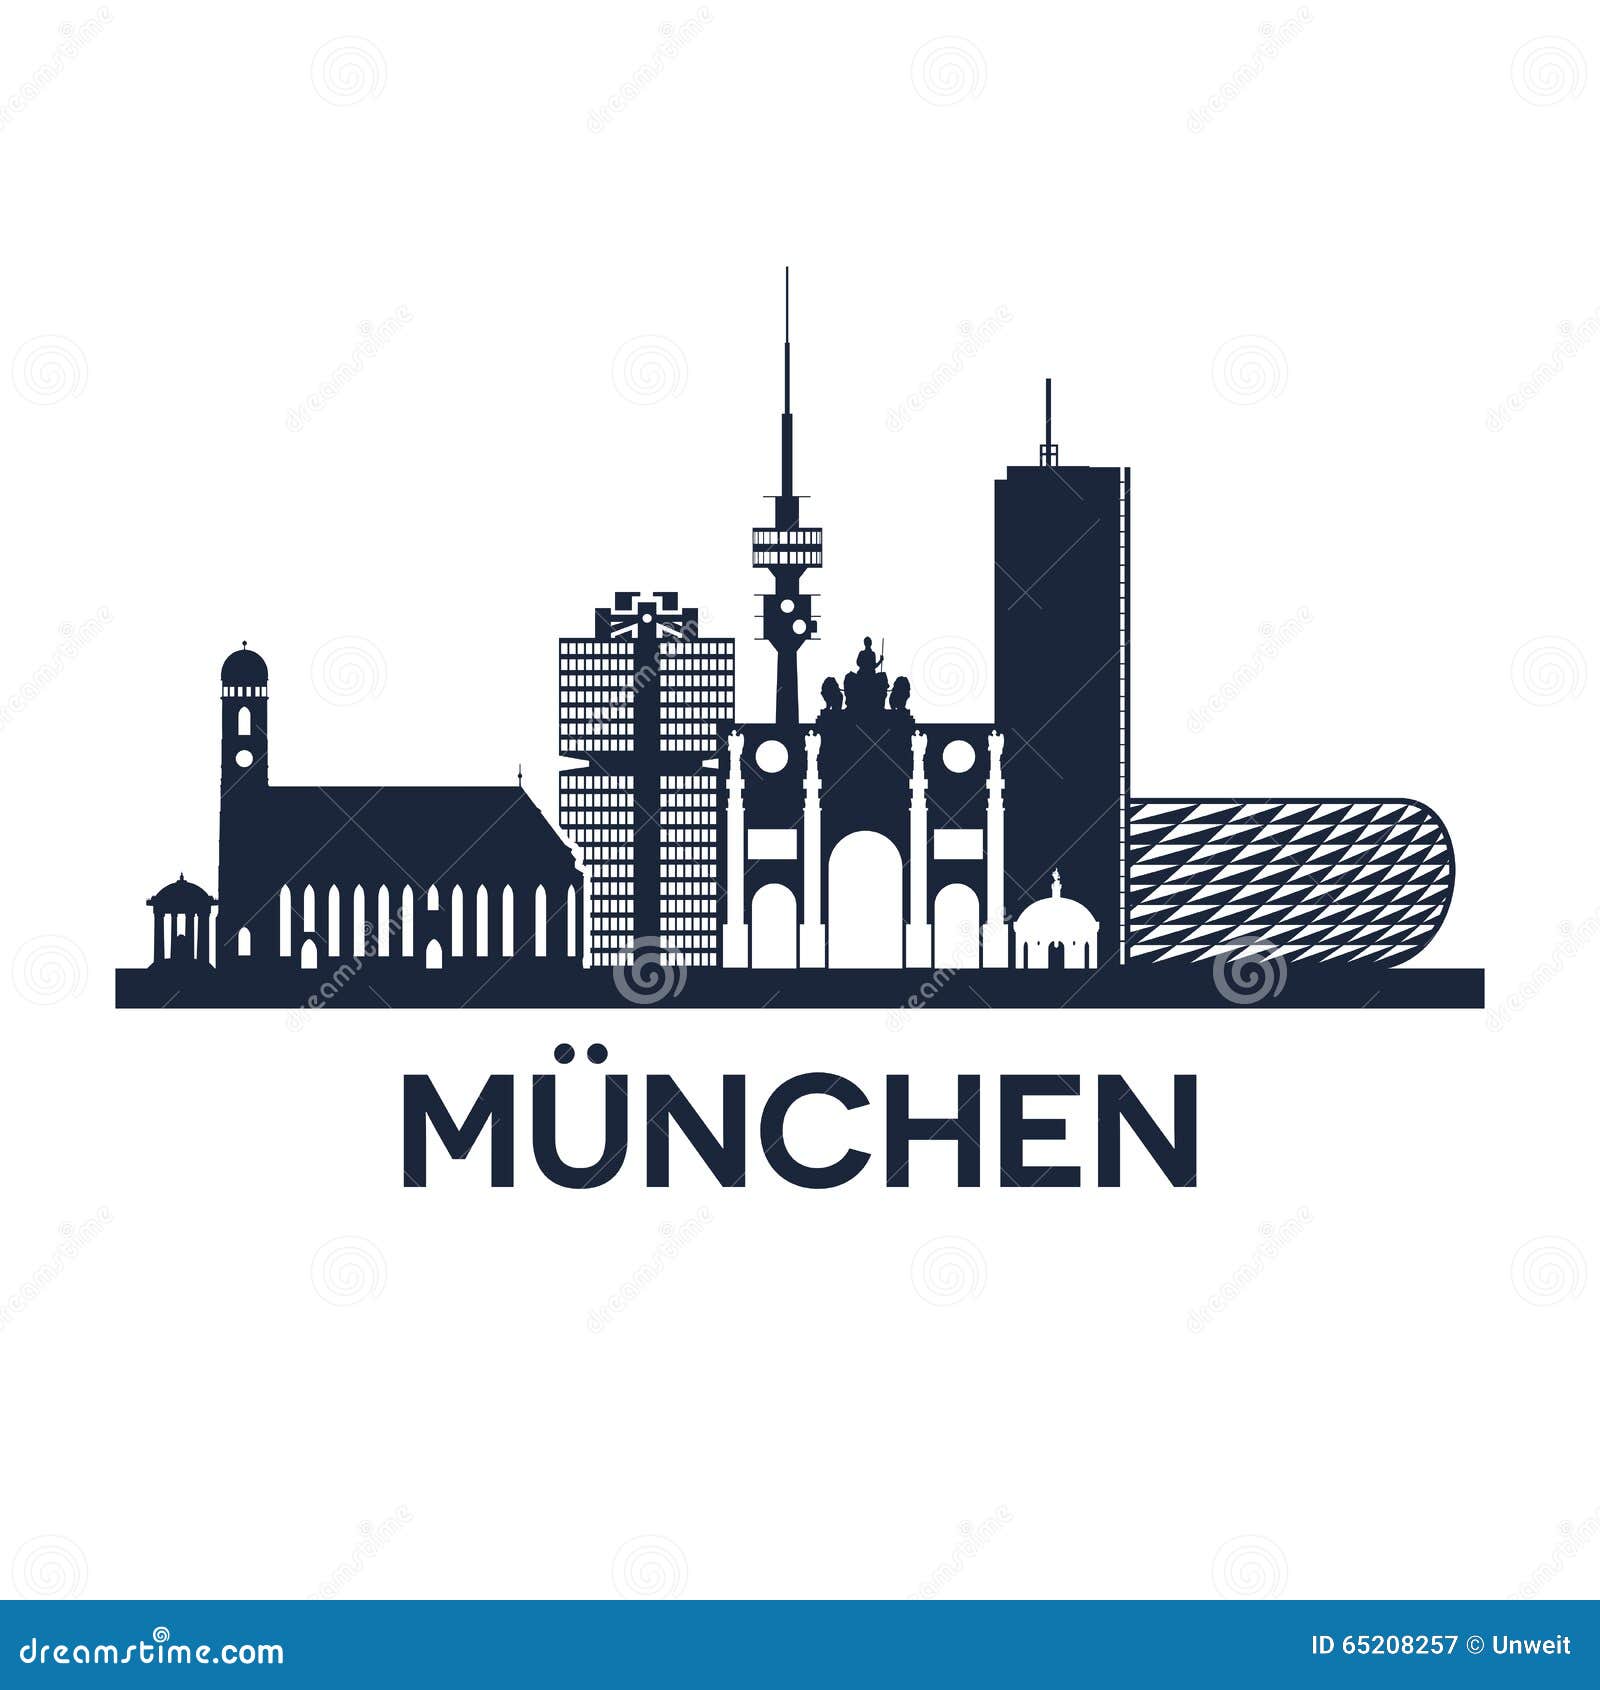 munich skyline emblem